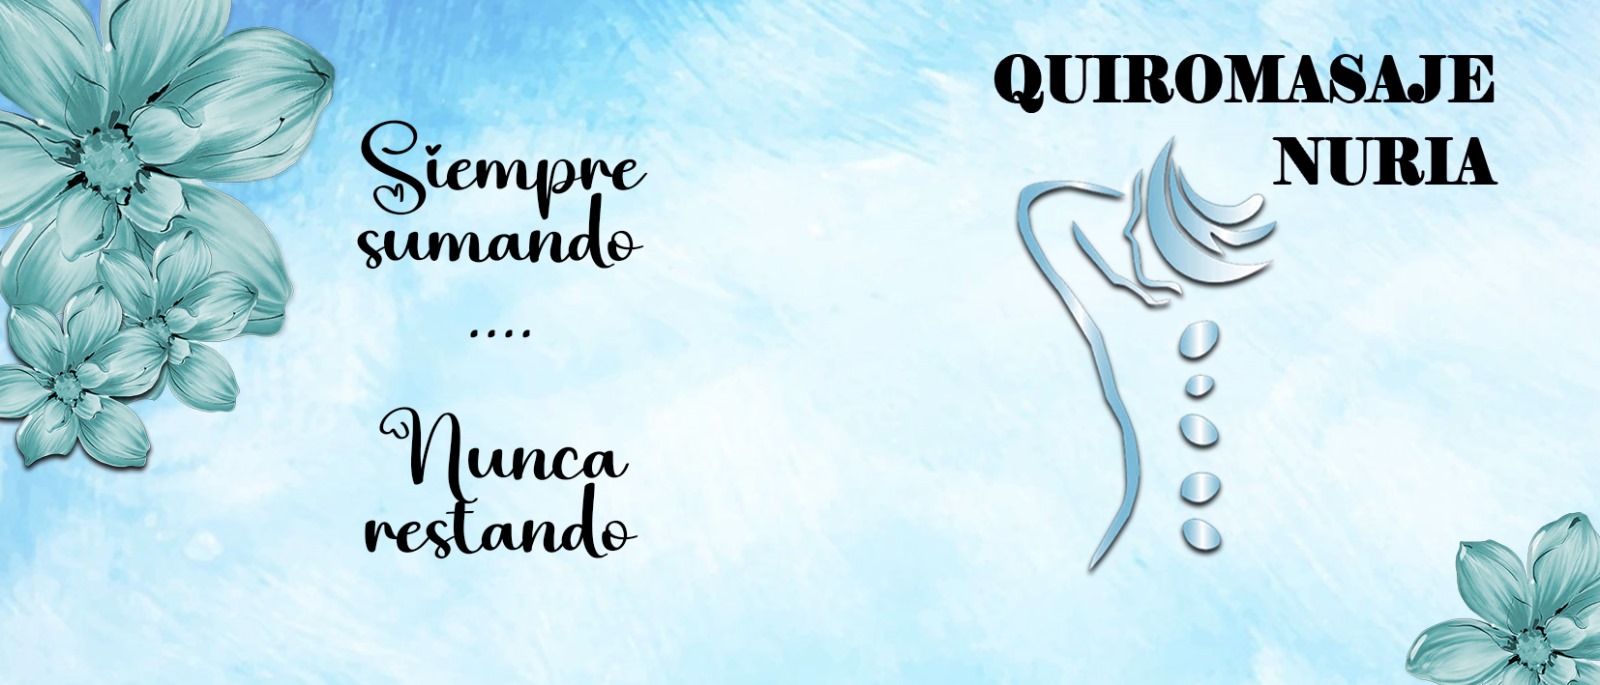 Quiromasaje Nuria tarjeta cartel